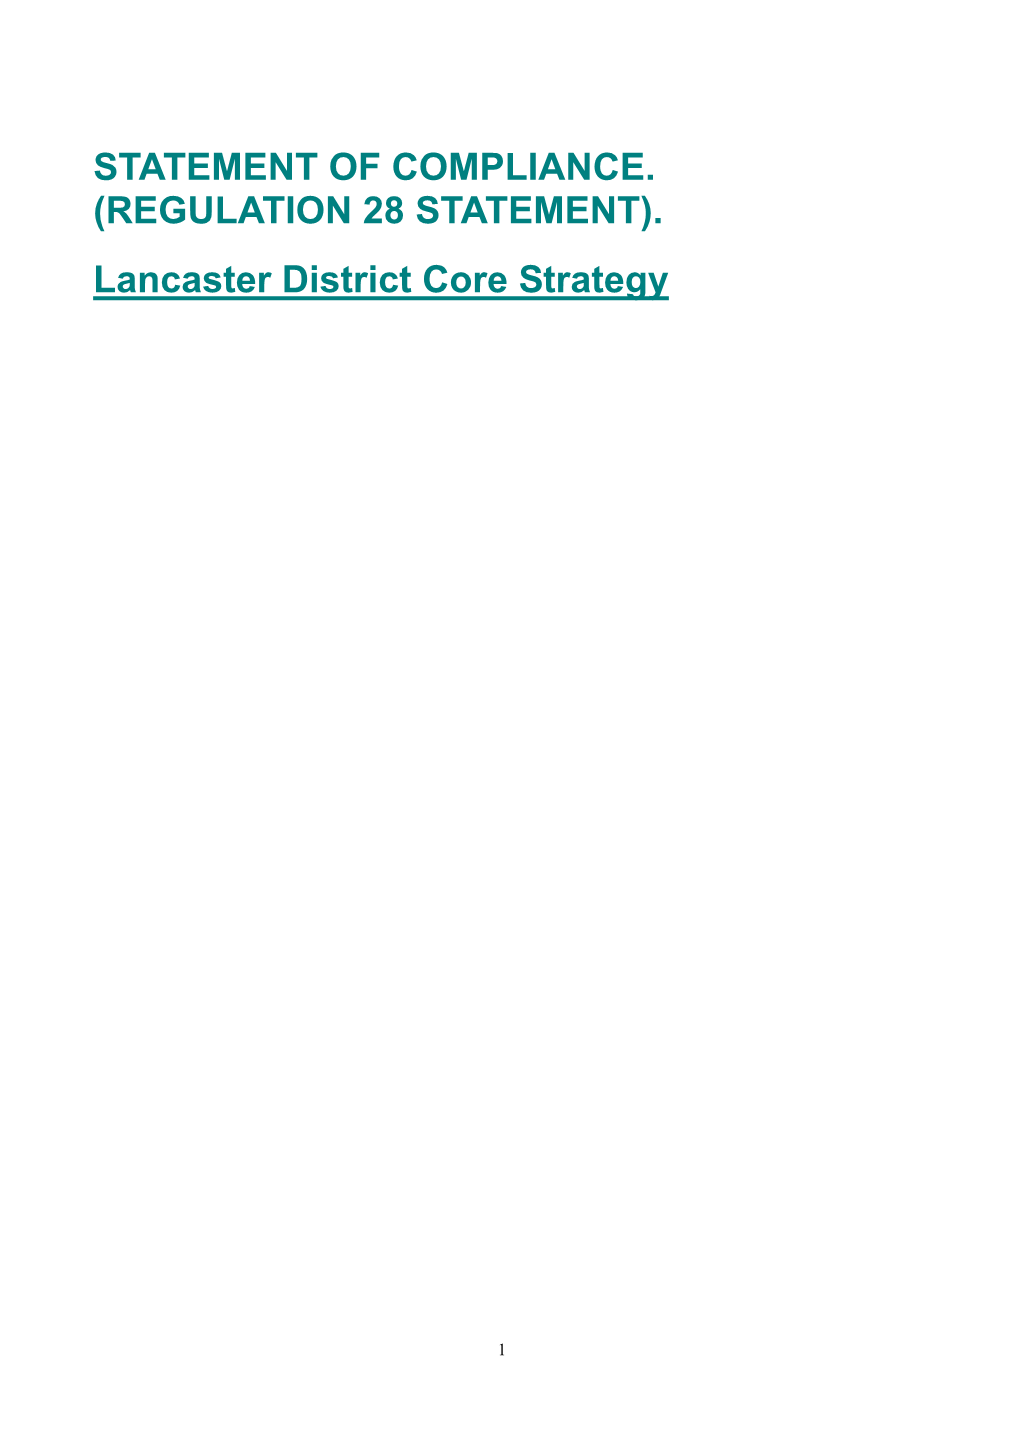 Lancaster District Core Strategy